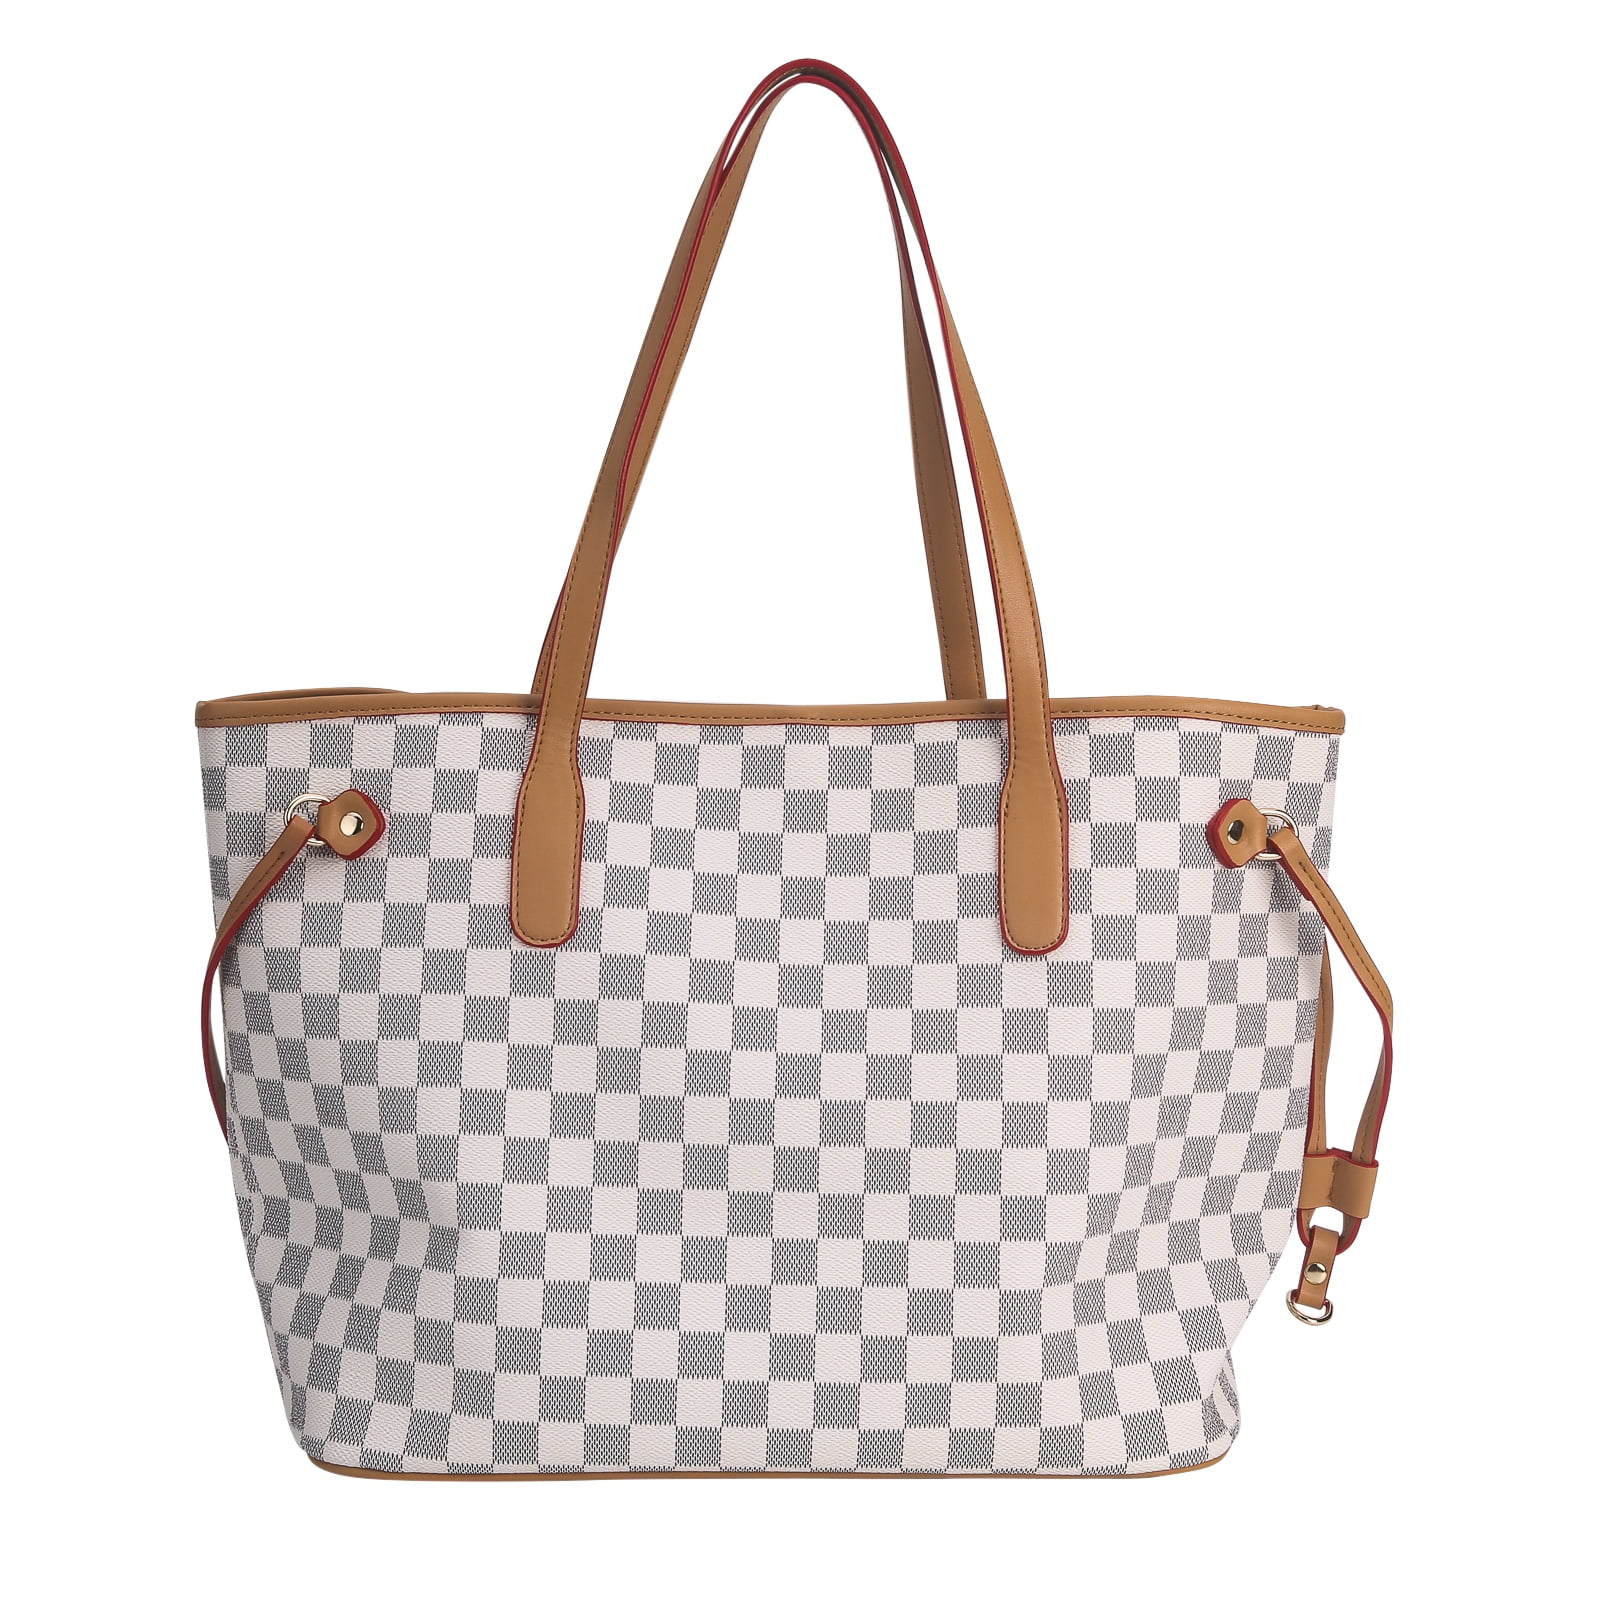 Louis Vuitton Neverfull Checkerboard Handheld Shoulder Bag Cherry